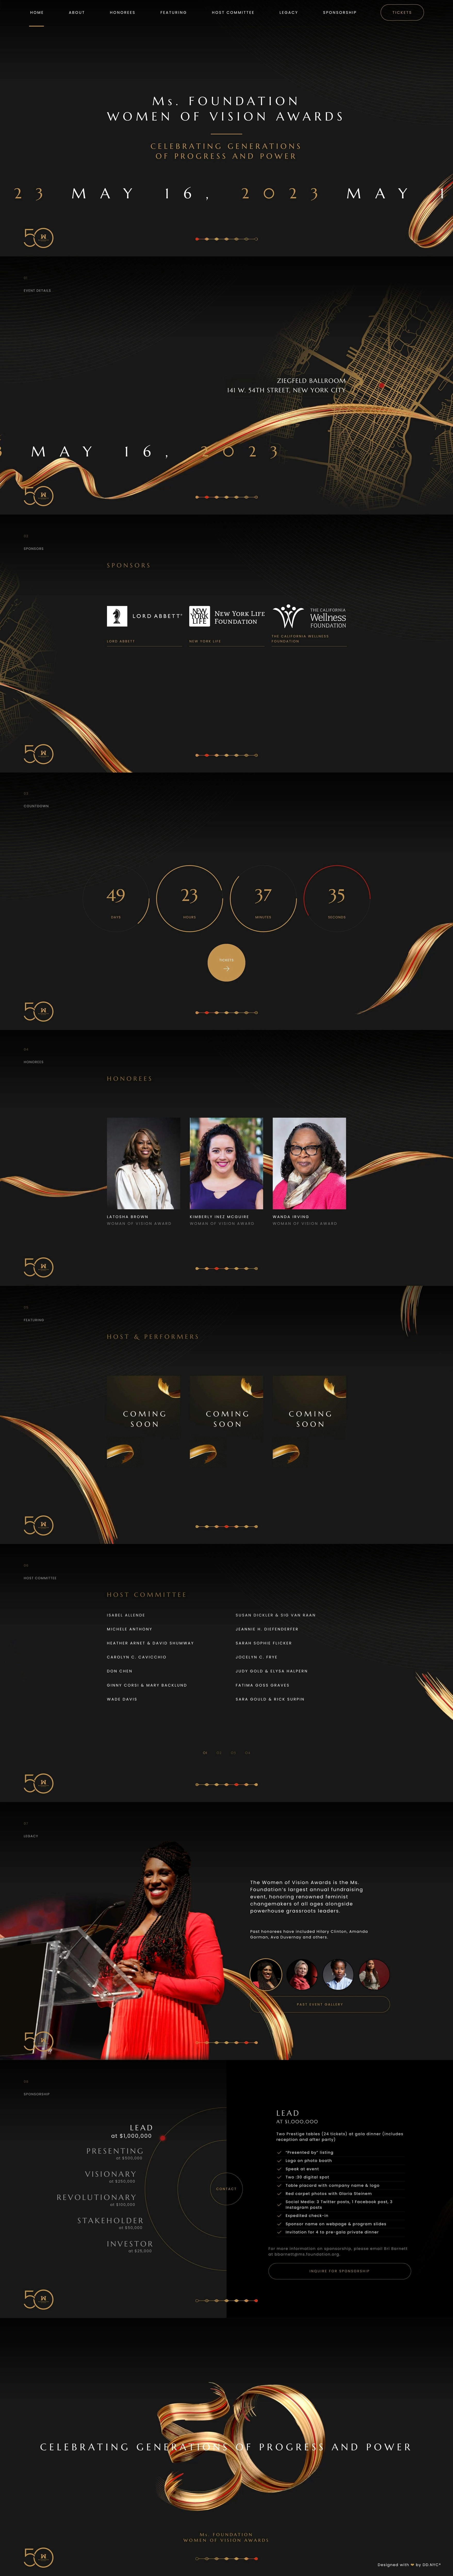 Ms. Foundation’s Women of Vision Awards Website Screenshot